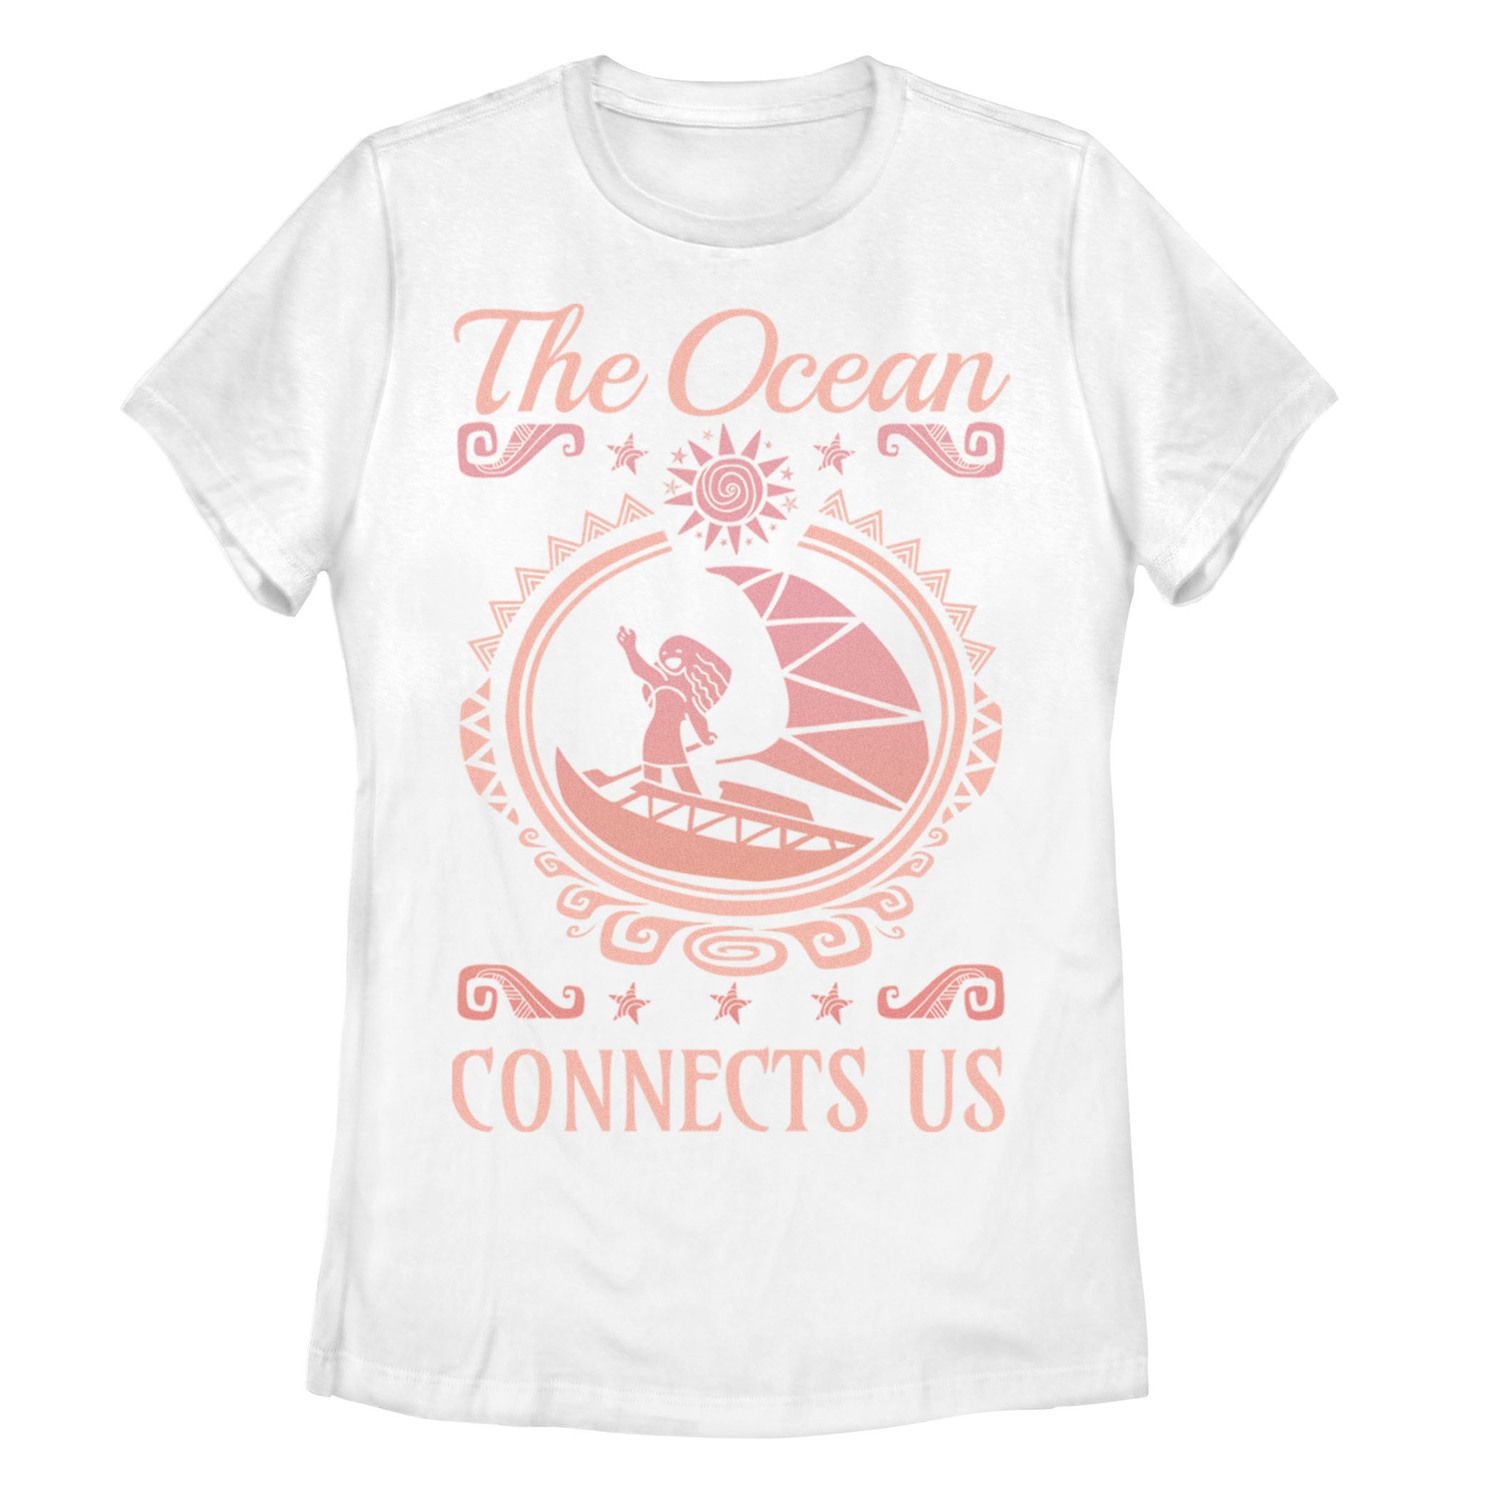 Коралловая футболка Disney Moana для юниоров The Ocean Connects Us Licensed Character футболка disney s moana boys 8–20 the ocean connects us с графическим рисунком кораллового цвета licensed character